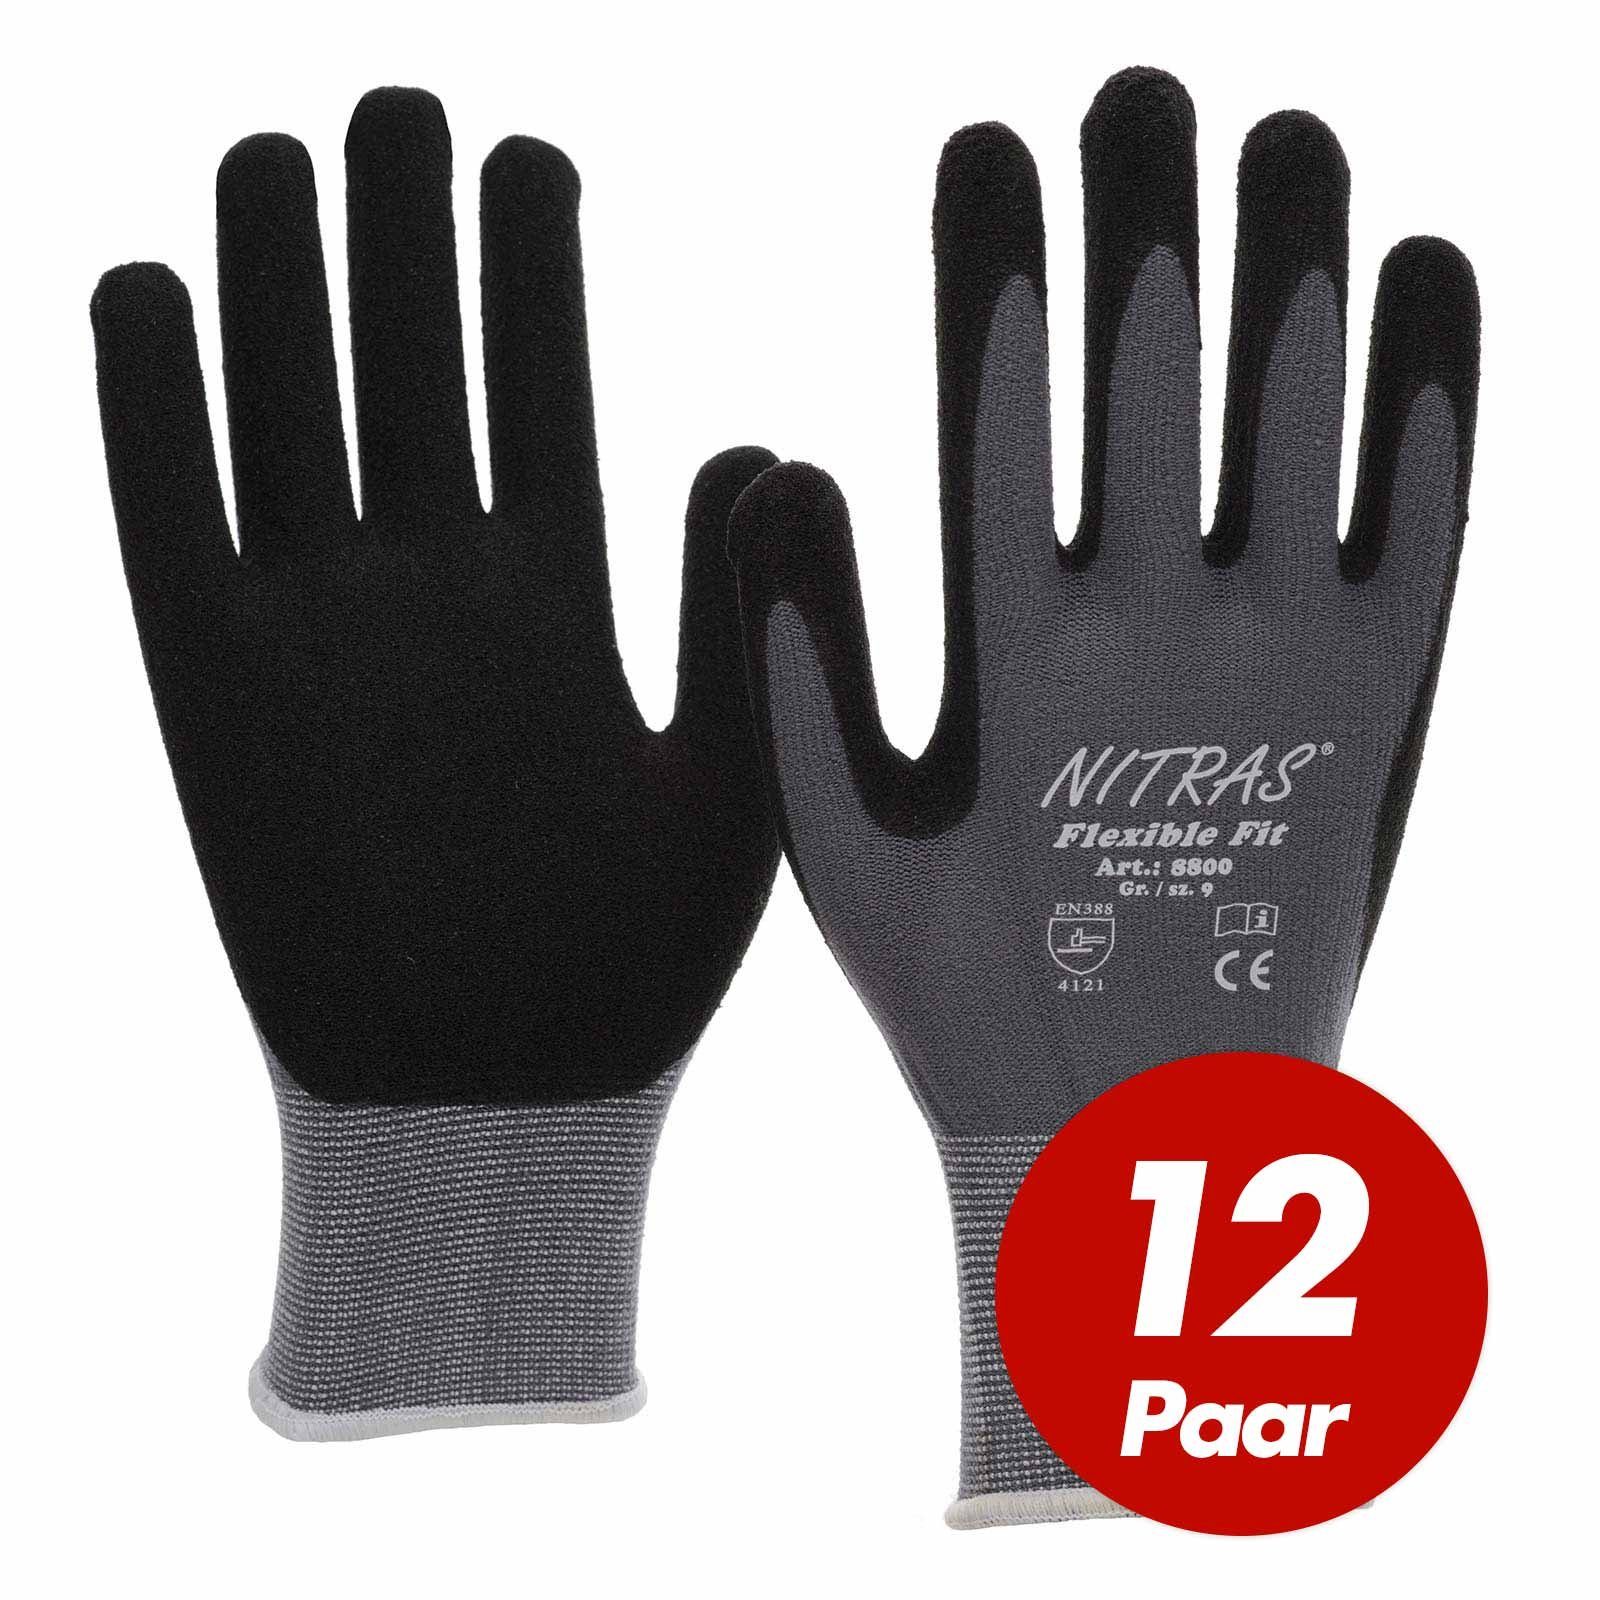 Nitras Nitril-Handschuhe 8800 Flexible Fit Allroundhandschuhe, Handschuhe - VPE 12 Paar (Spar-Set)